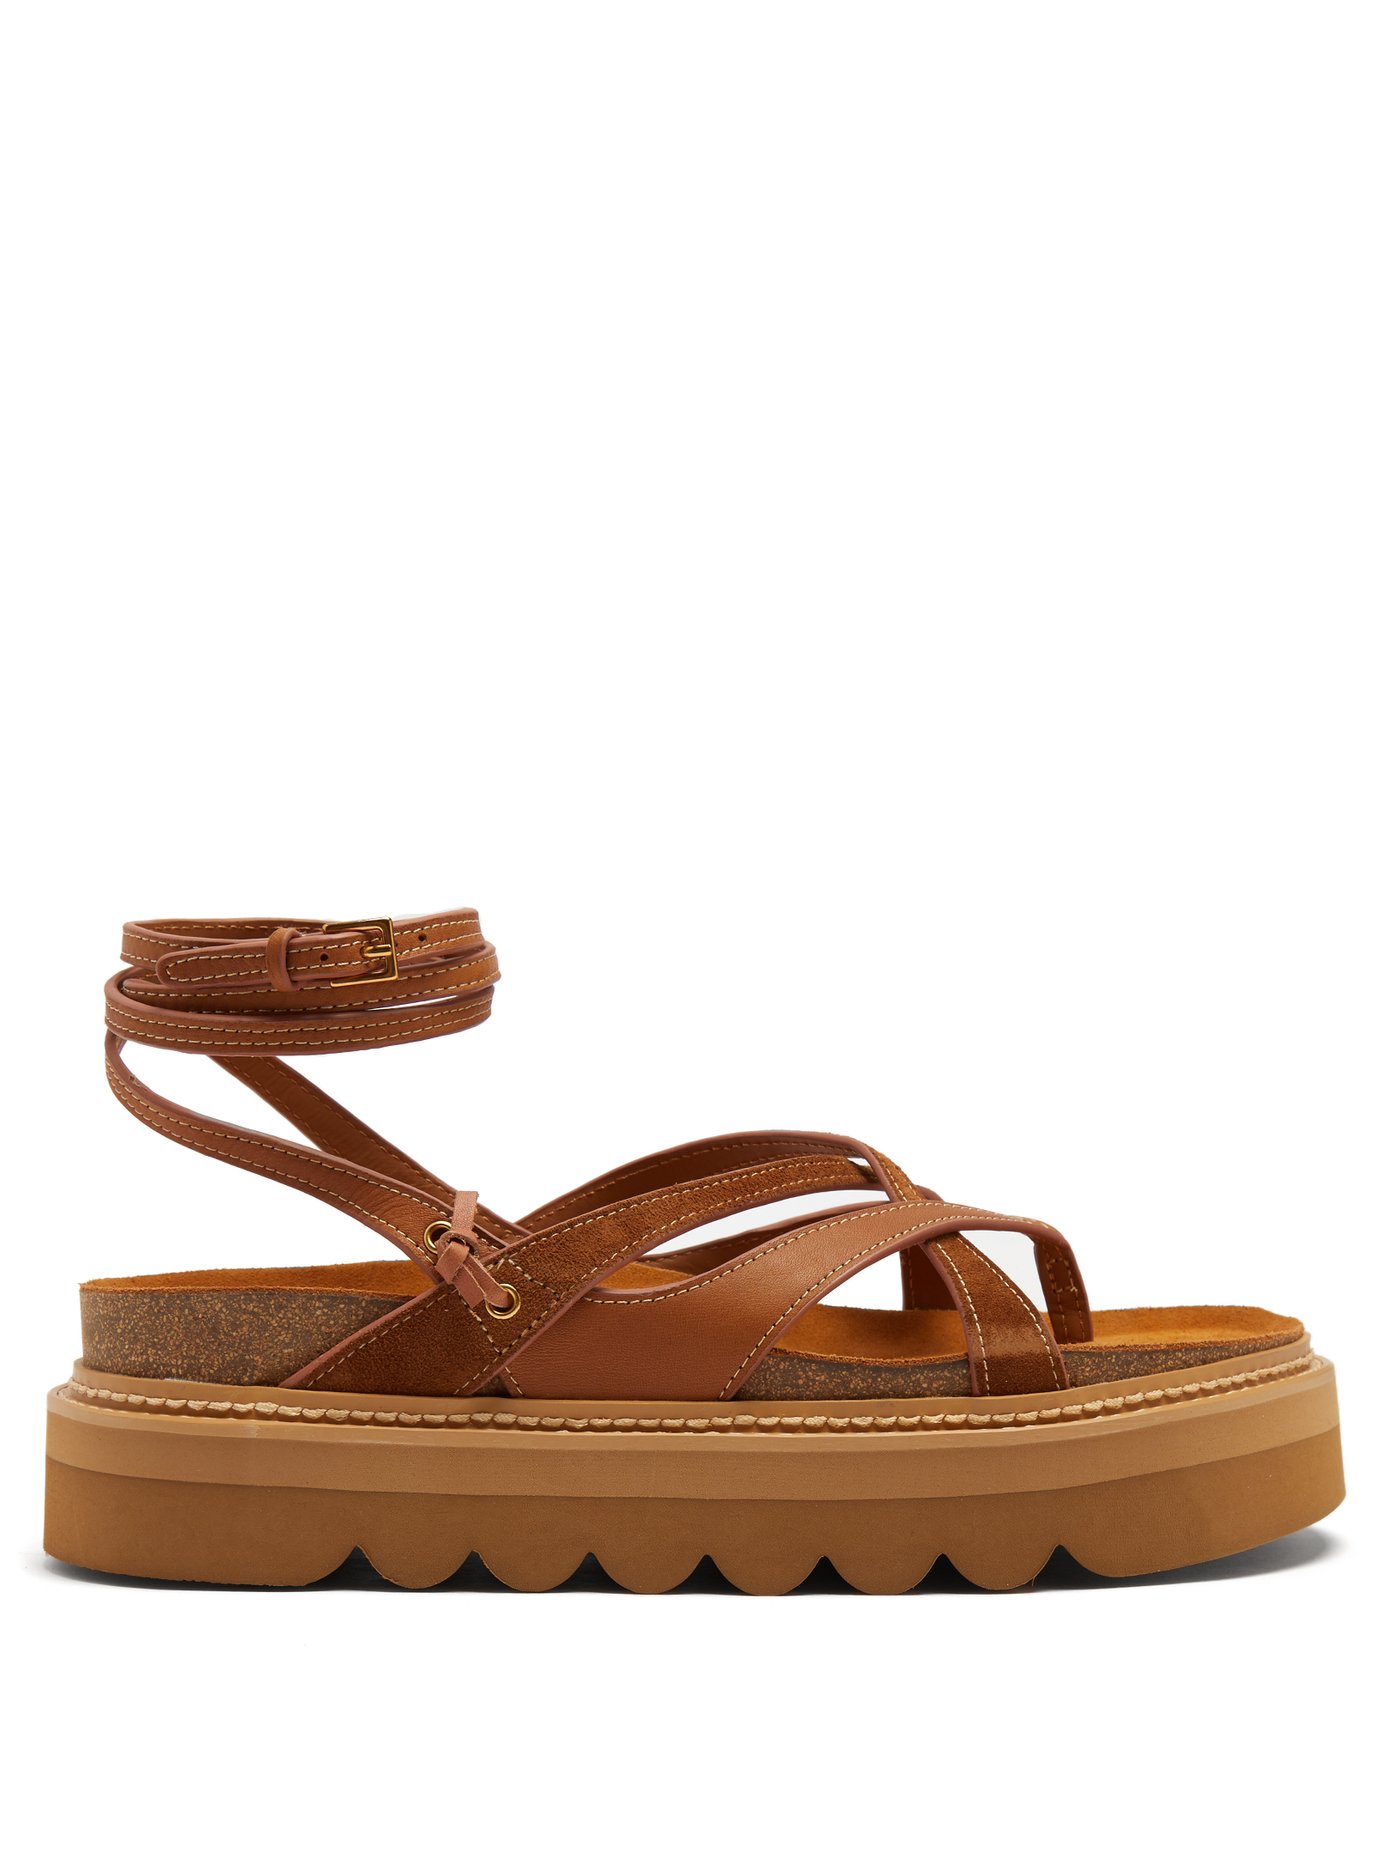 flatform tan sandals